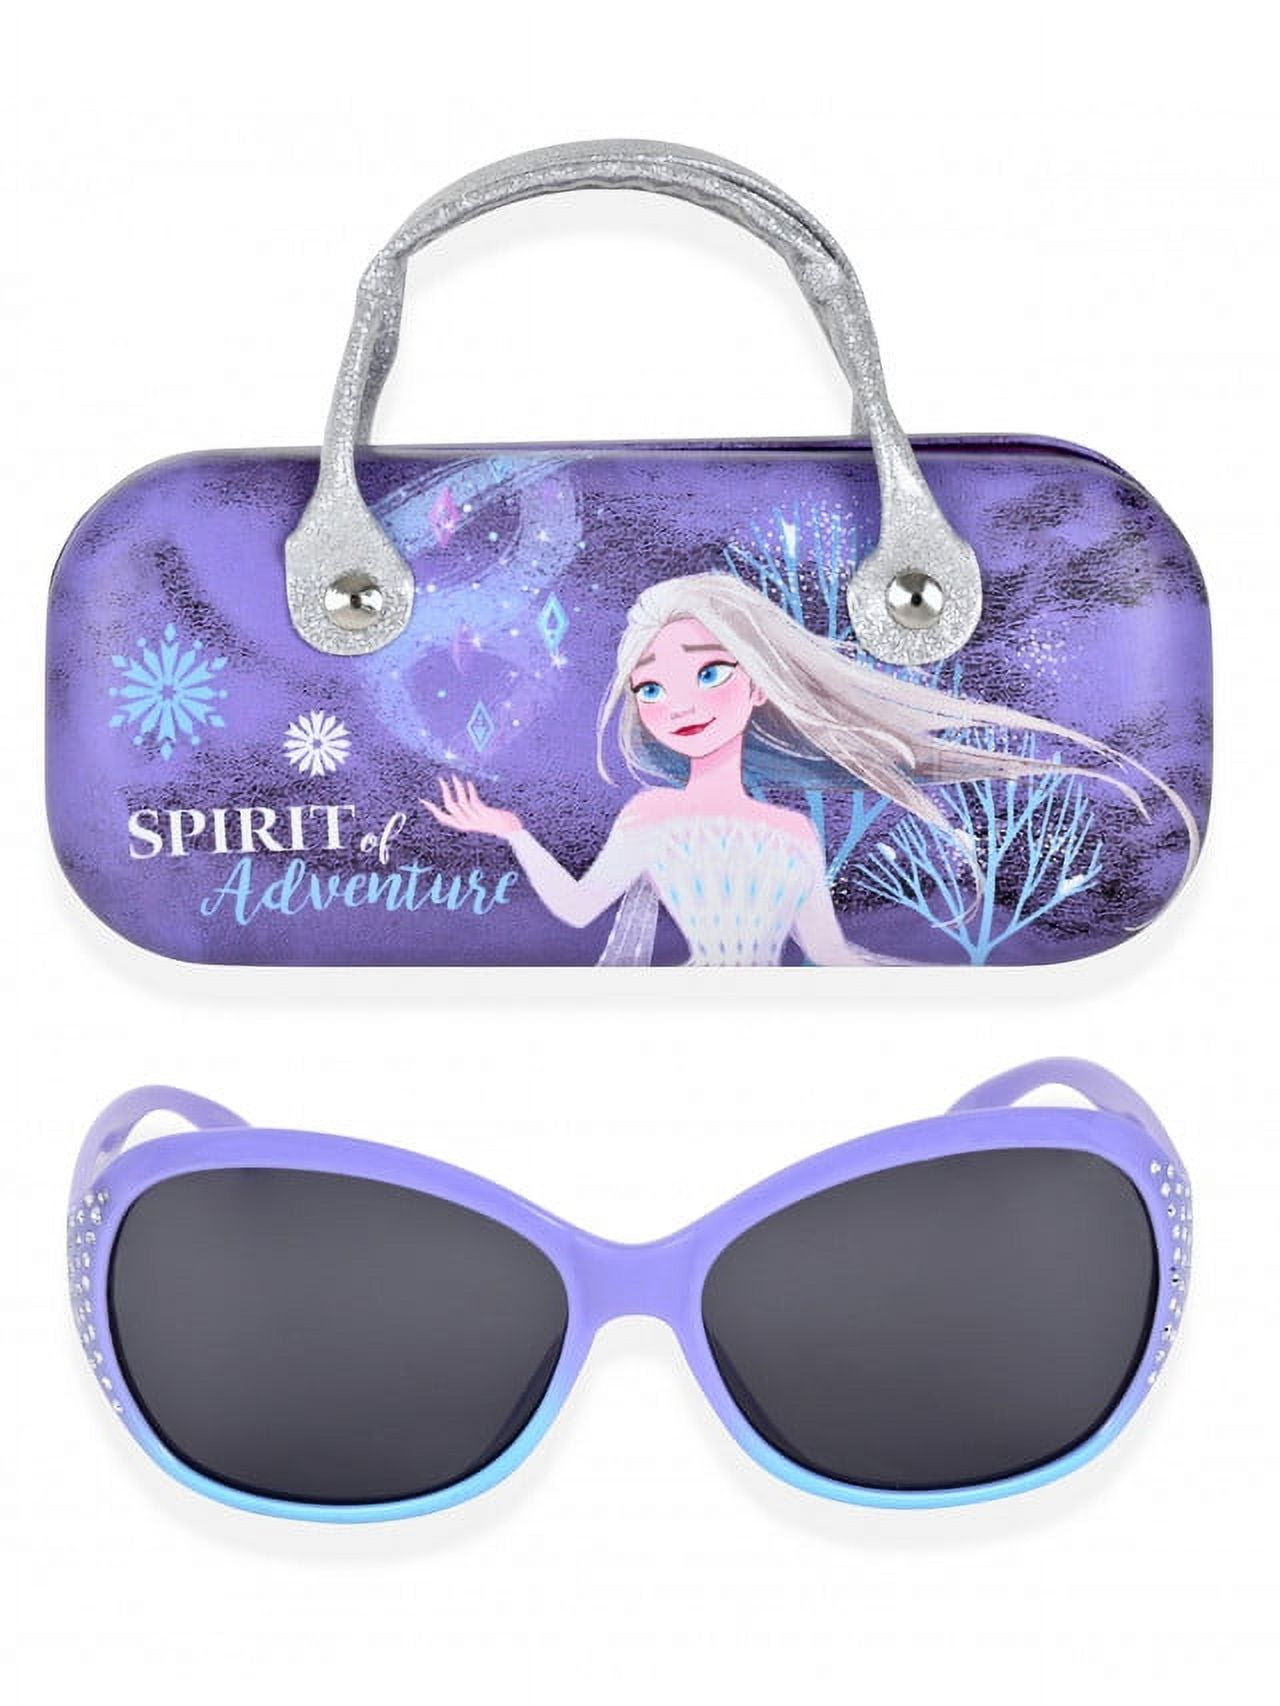 Disney Frozen Girls' Star Handbag - blue/multi, one size - Walmart.com